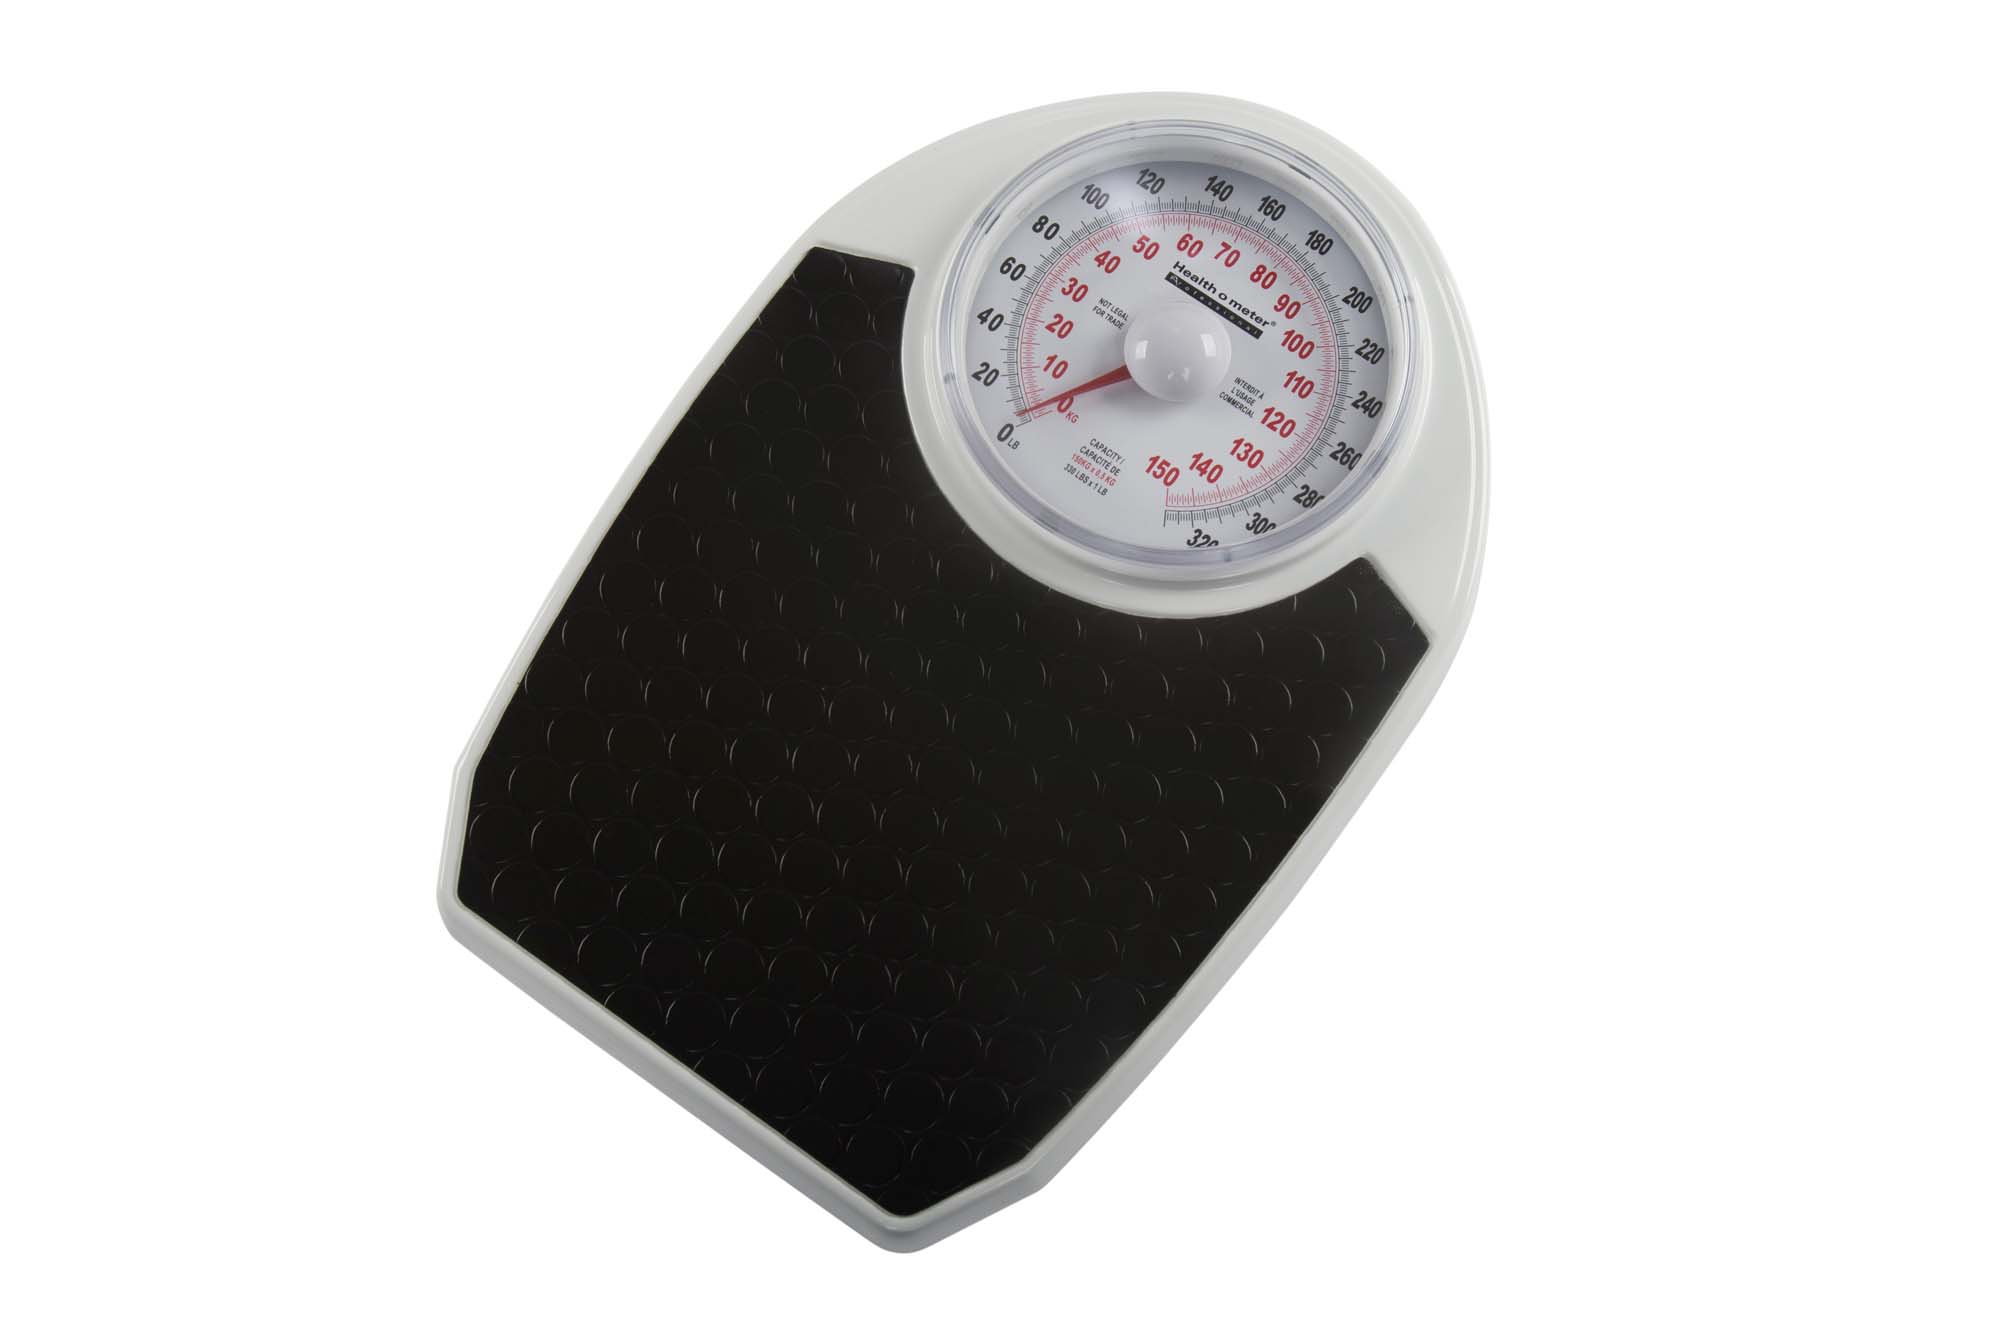 Healthometer 880KL Professional Floor Scale 500 lb/220 kg Capacity Tested